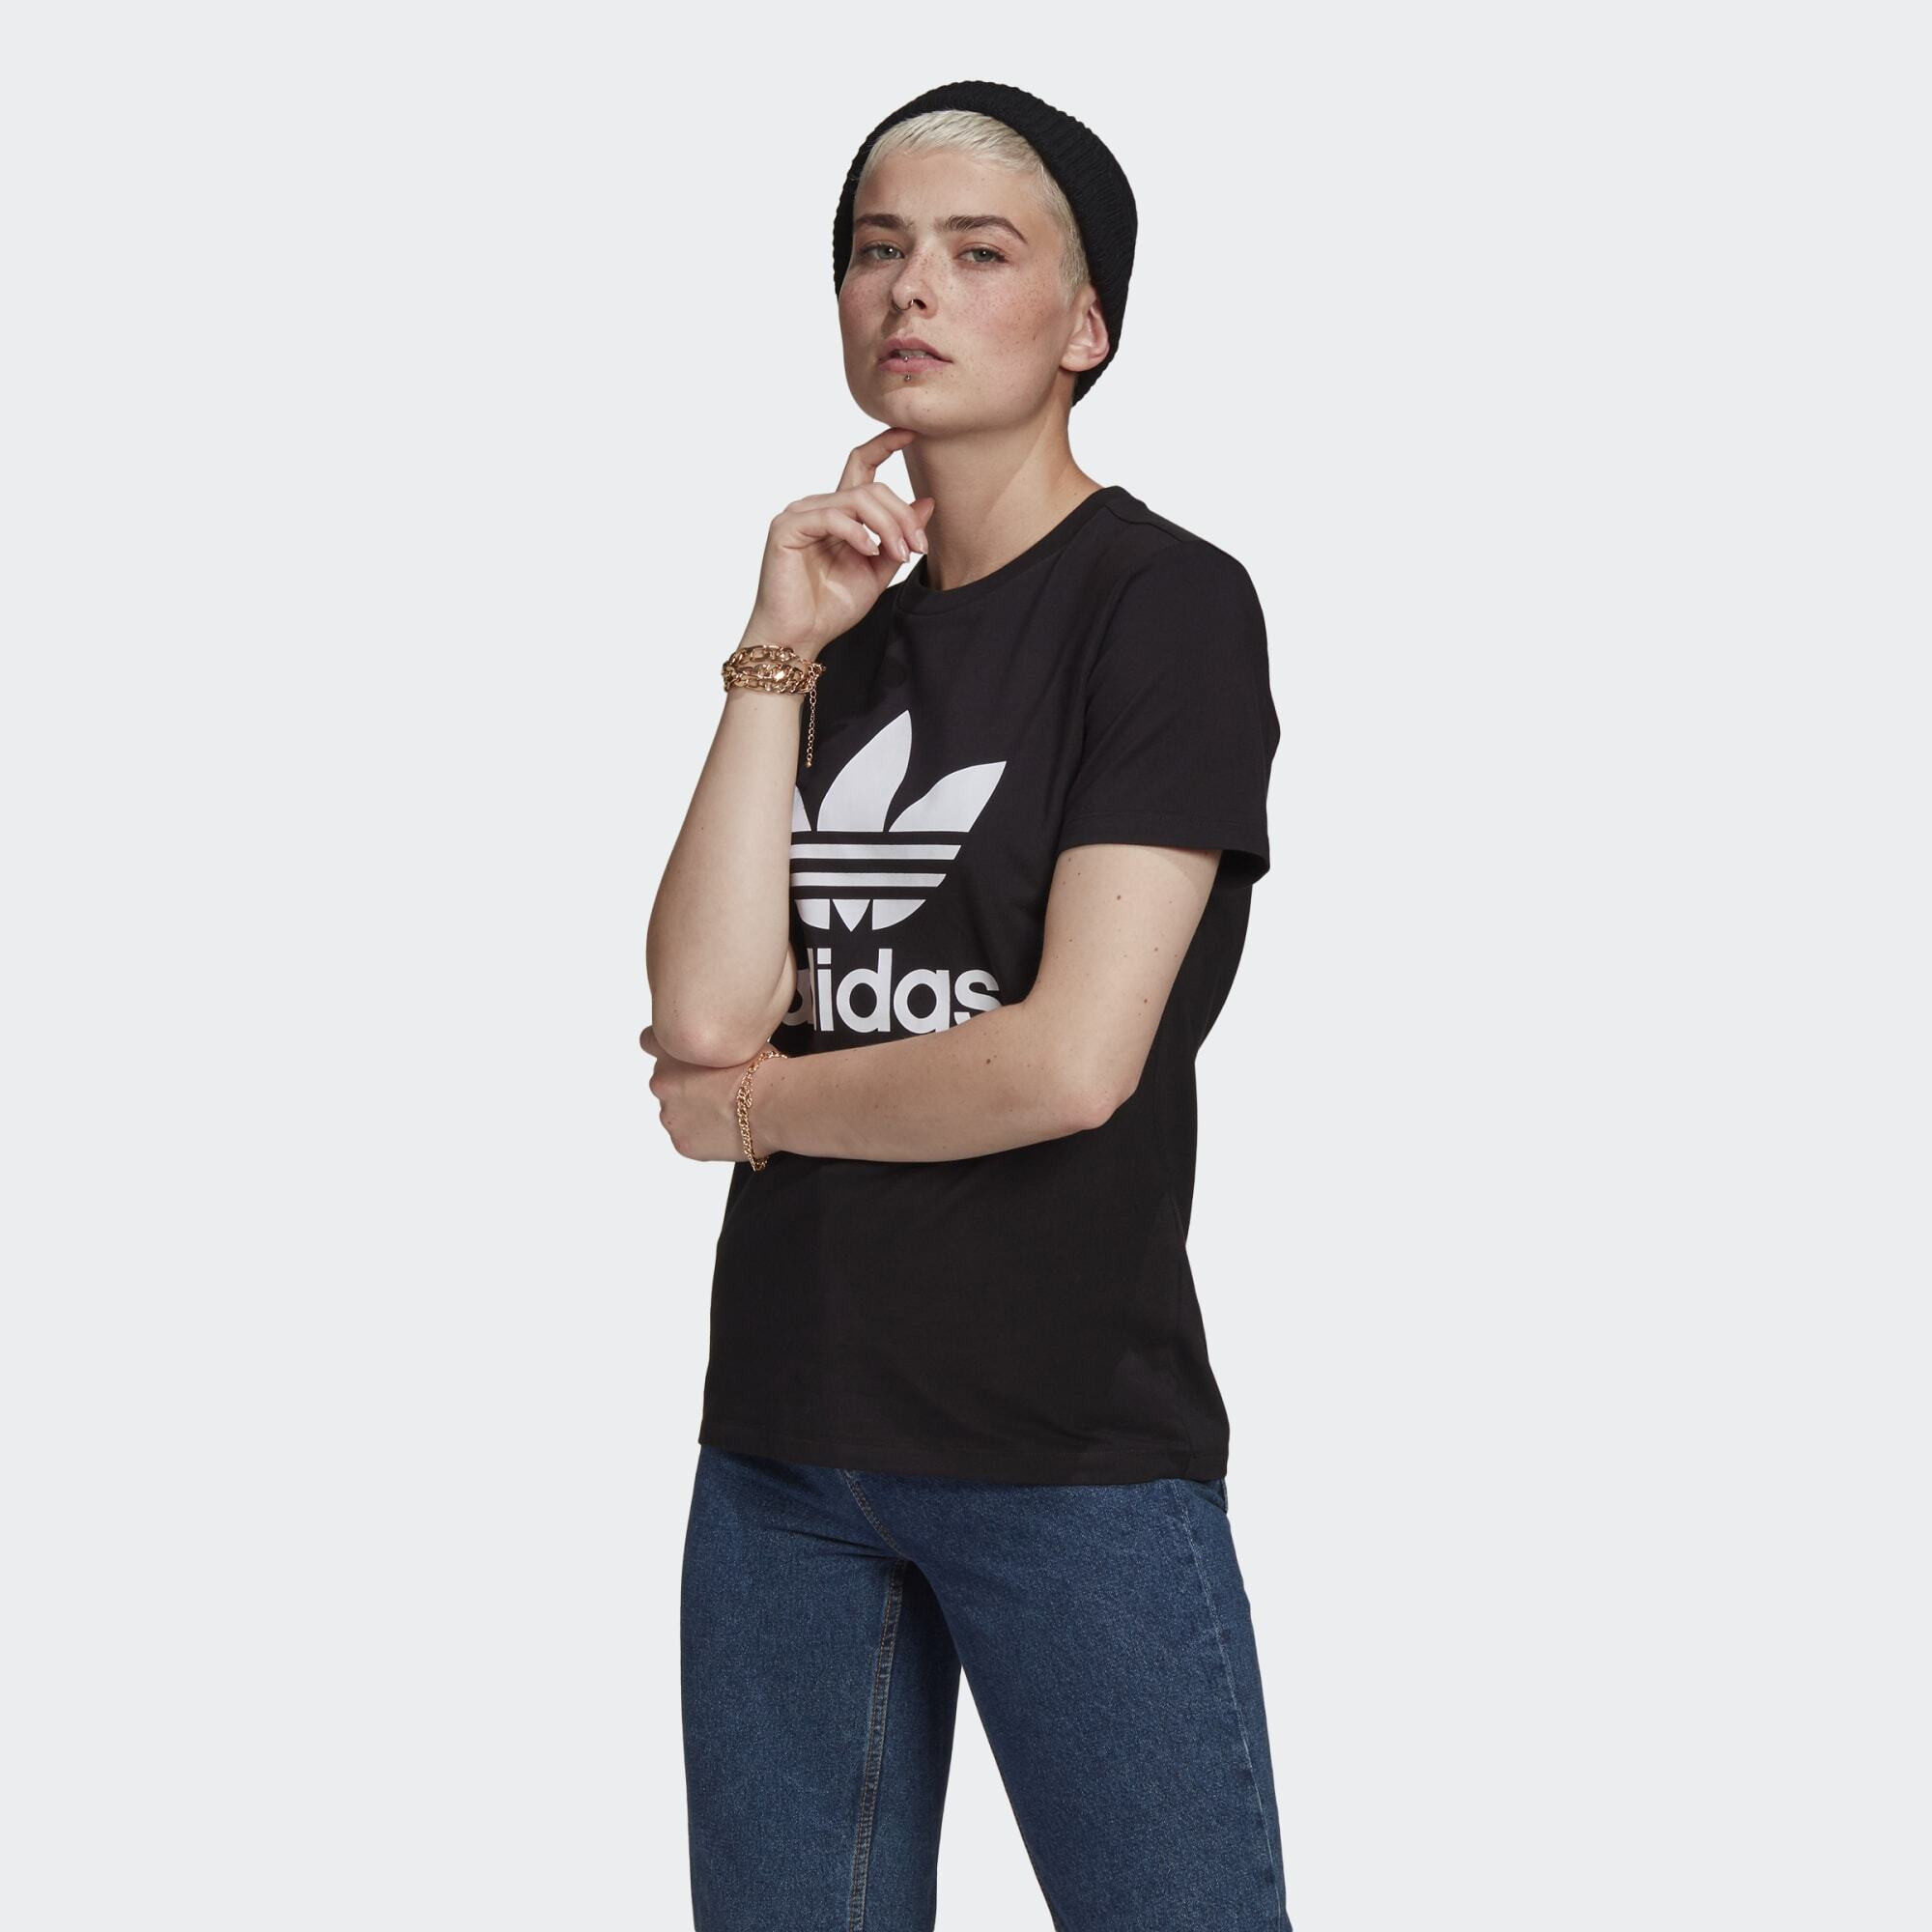 Adidas Originals Trefoil T-Shirt